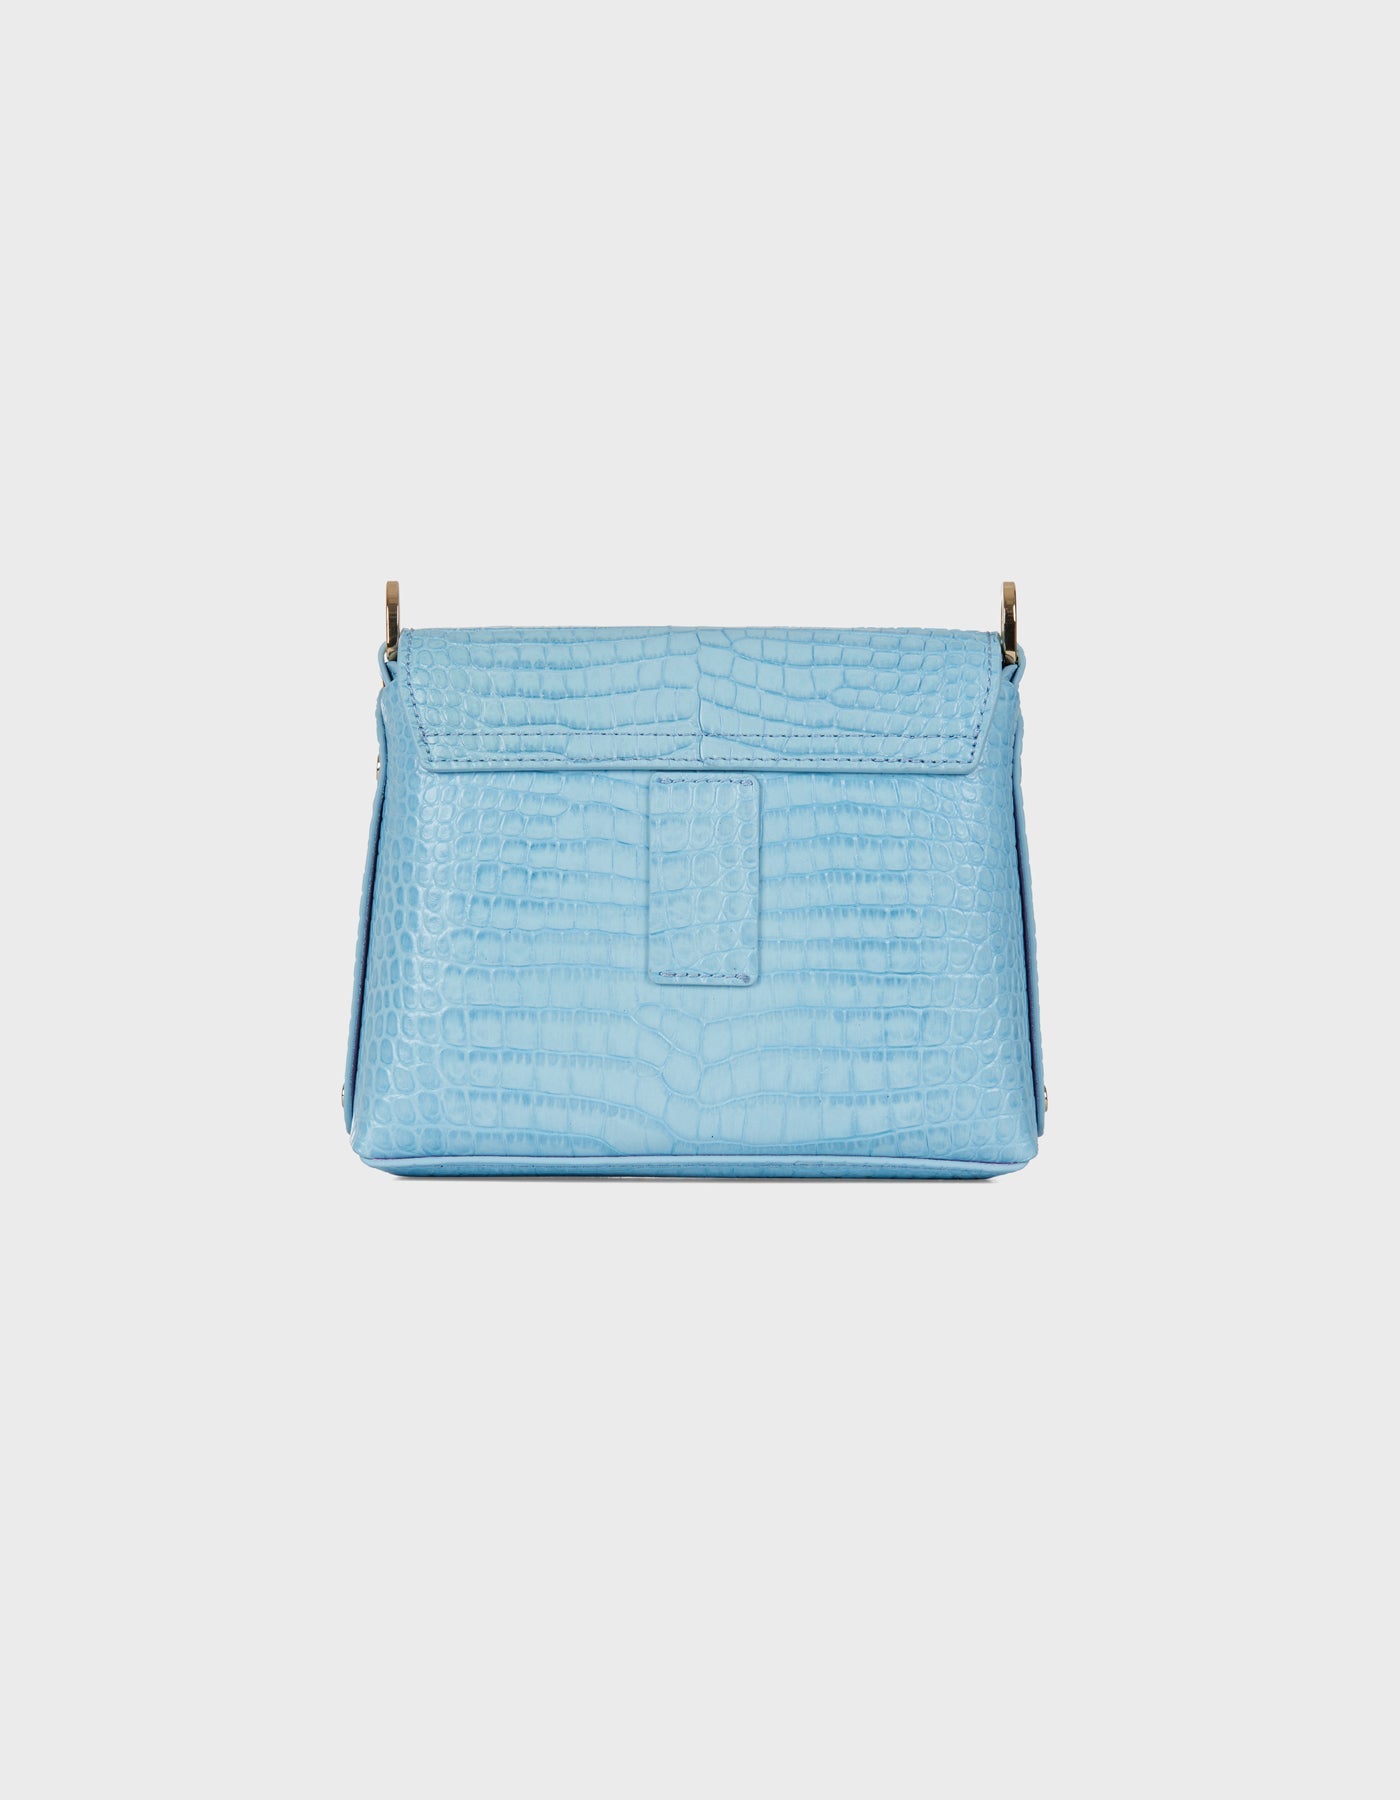 HiVa Atelier | Mini Mare Shoulder Bag Croco Effect Tranquil Blue | Beautiful and Versatile